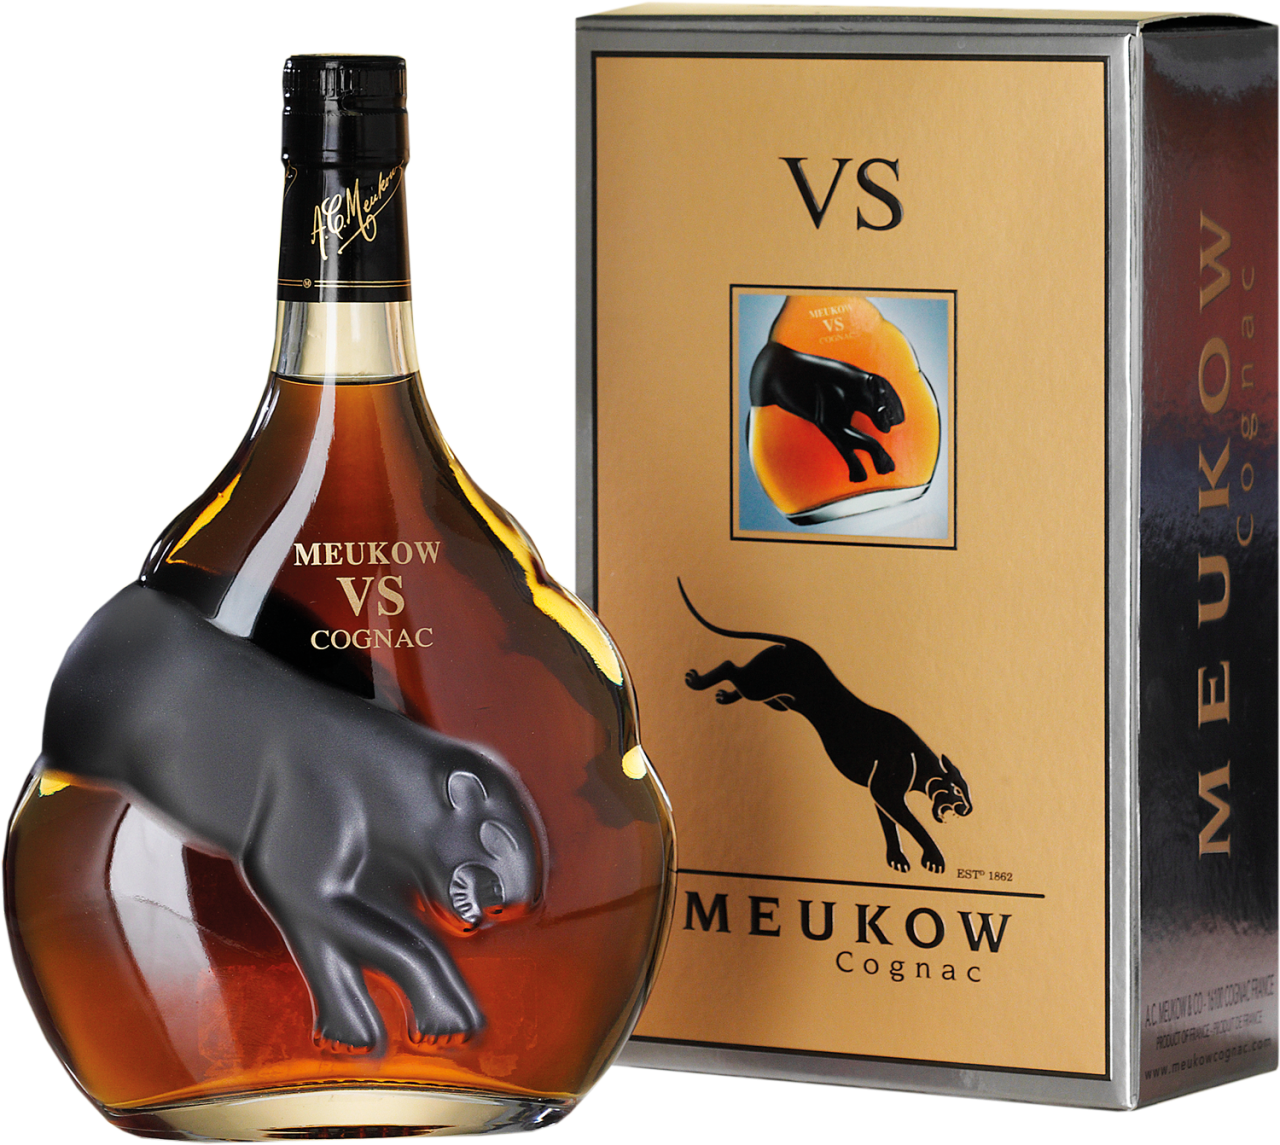 Meukow Cognac Meukow Feline VS im edlen Geschenkkarton